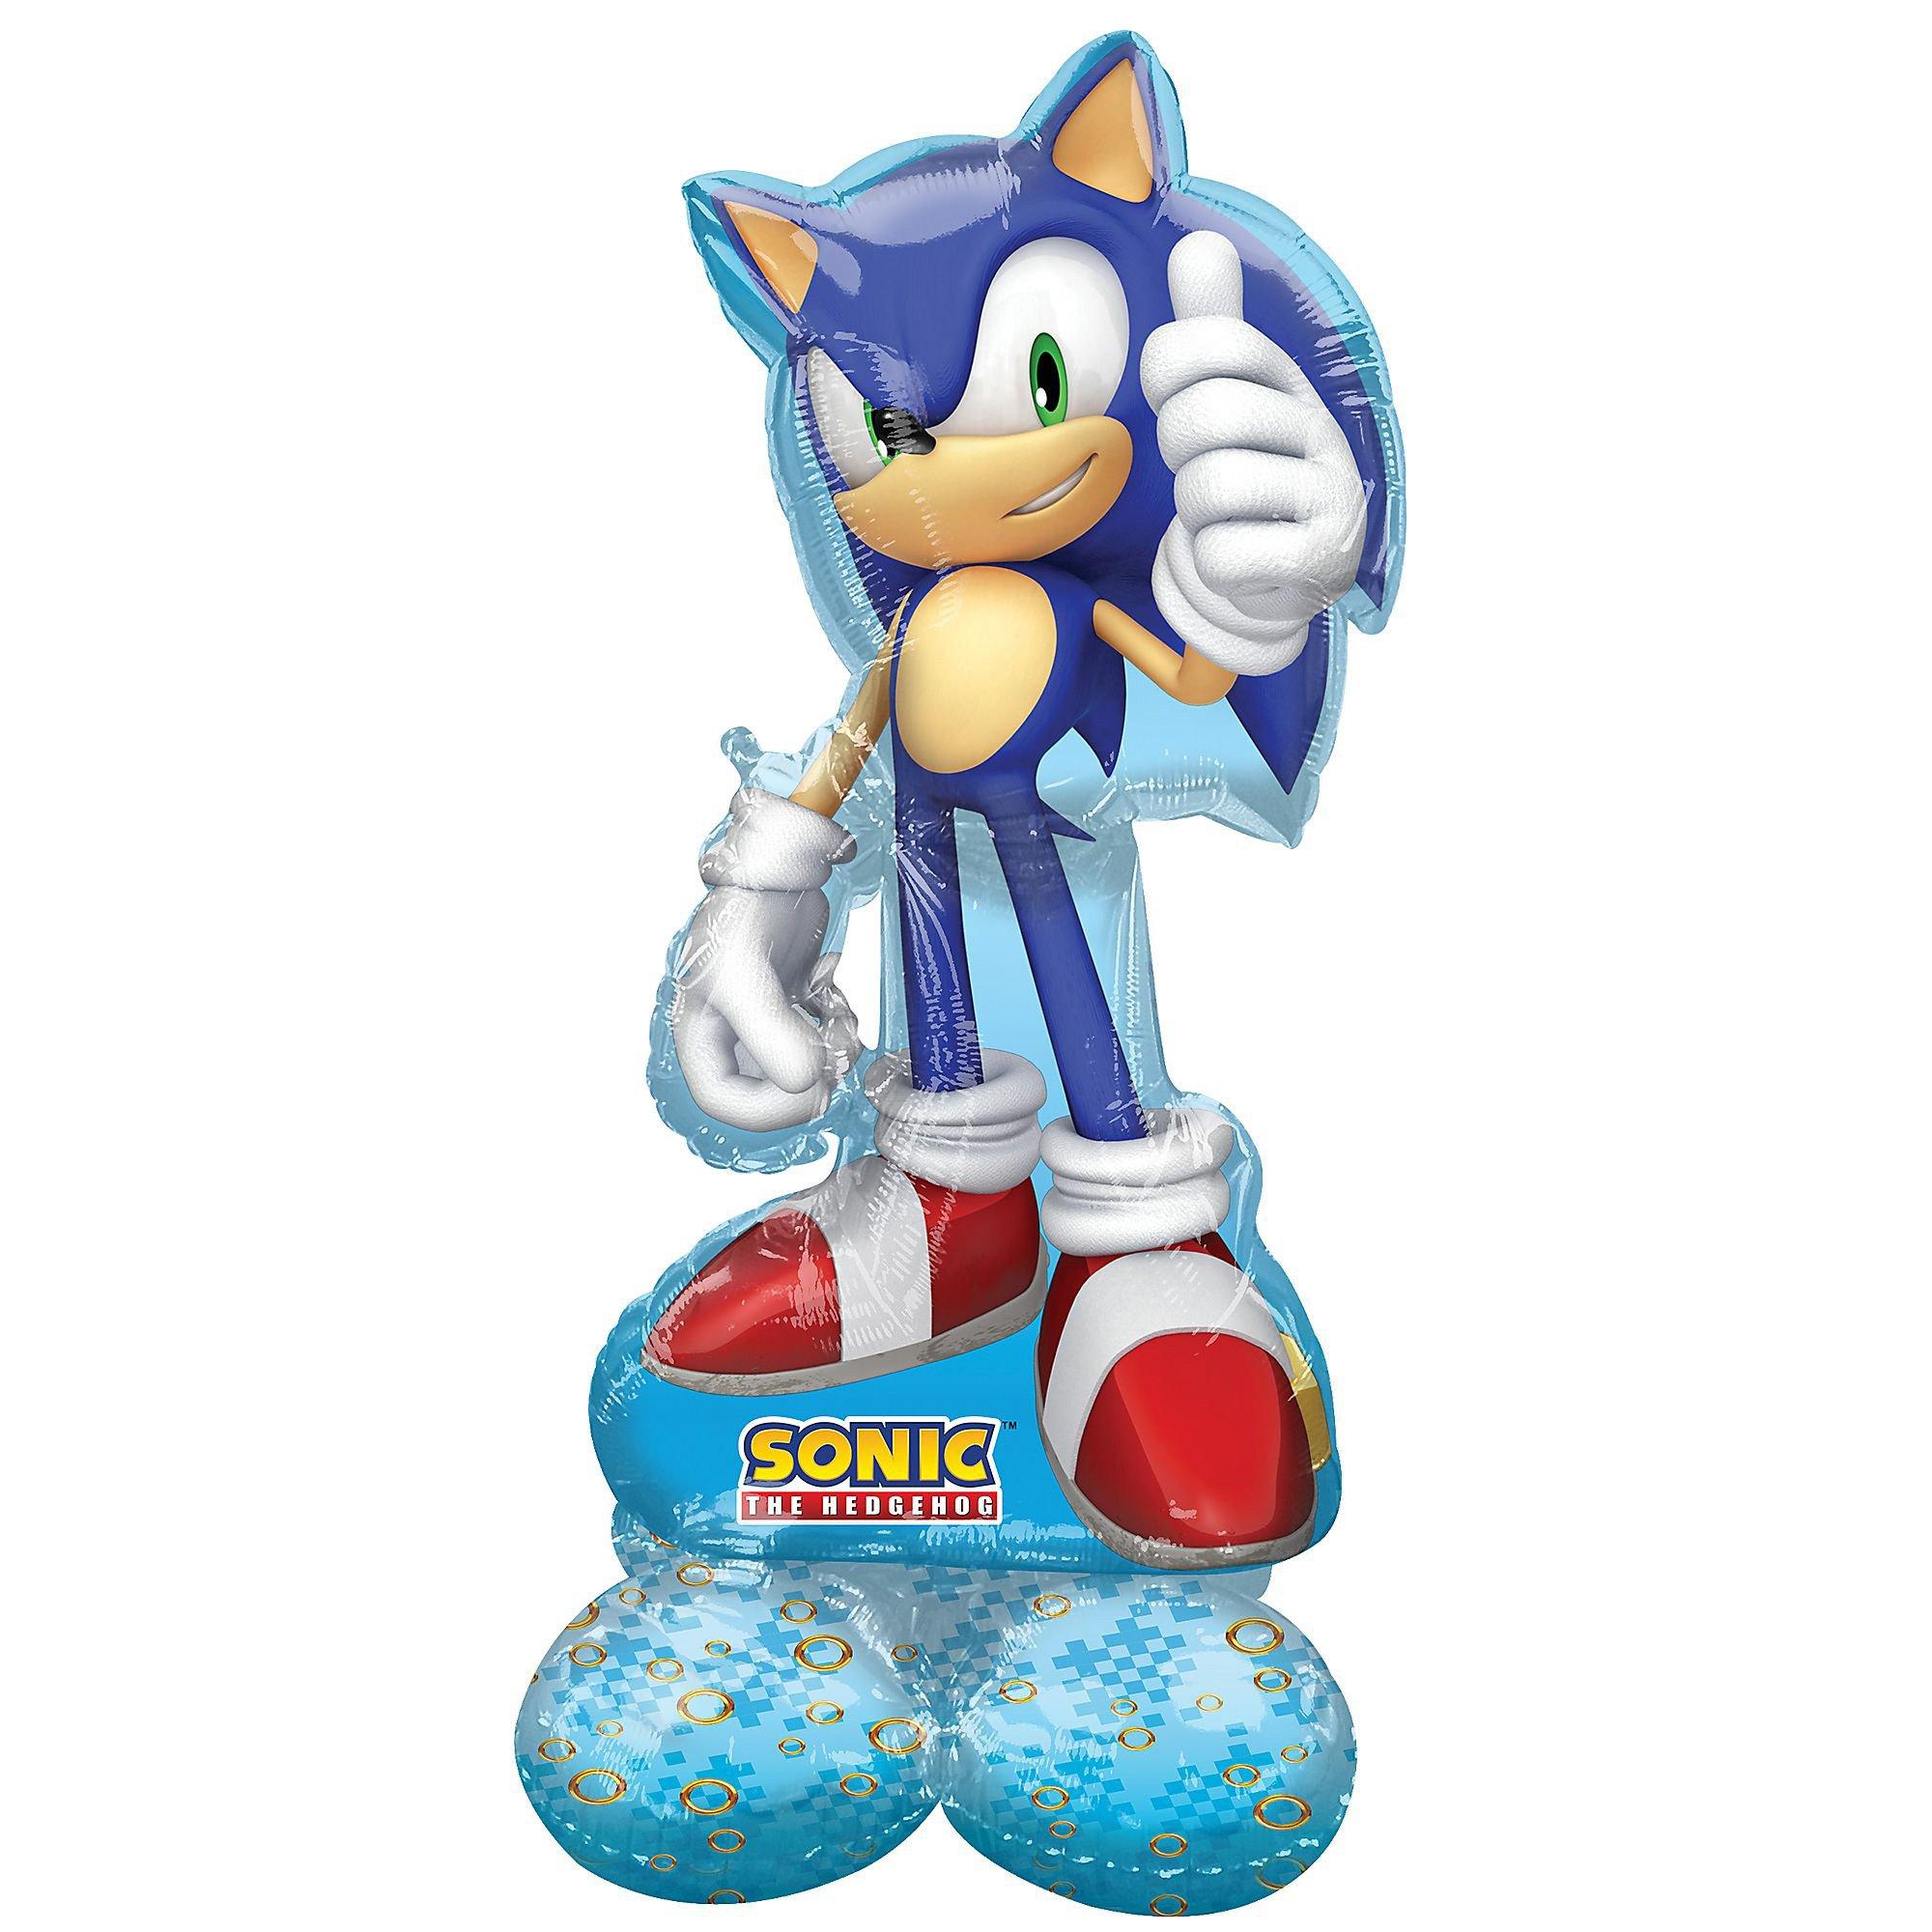 Sonic the Hedgehog 2' barrels to $71 million opening; 'Ambulance' stalls